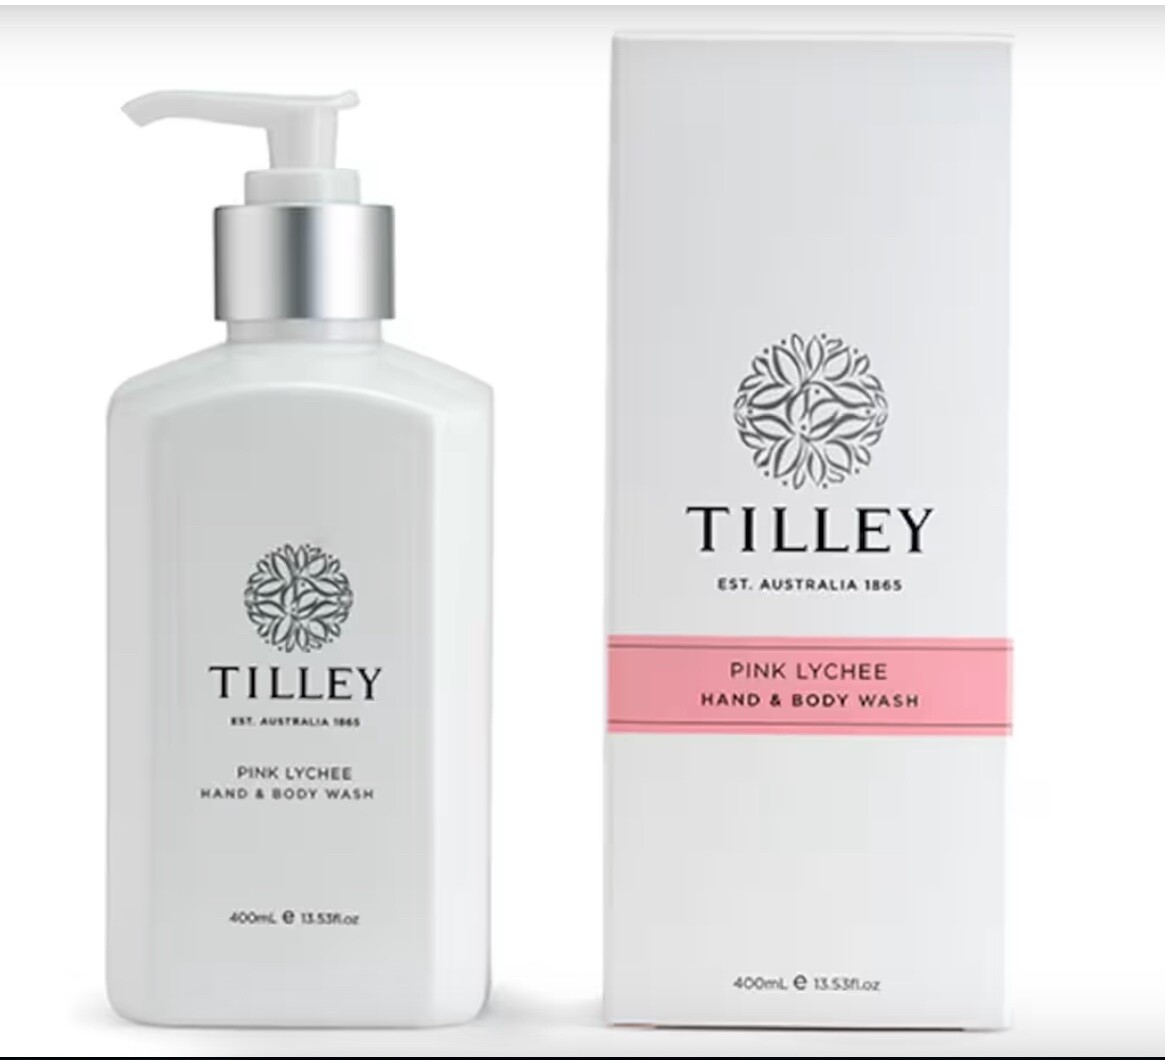 Tilley - Hand & Body Wash 400ml  - Pink Lychee